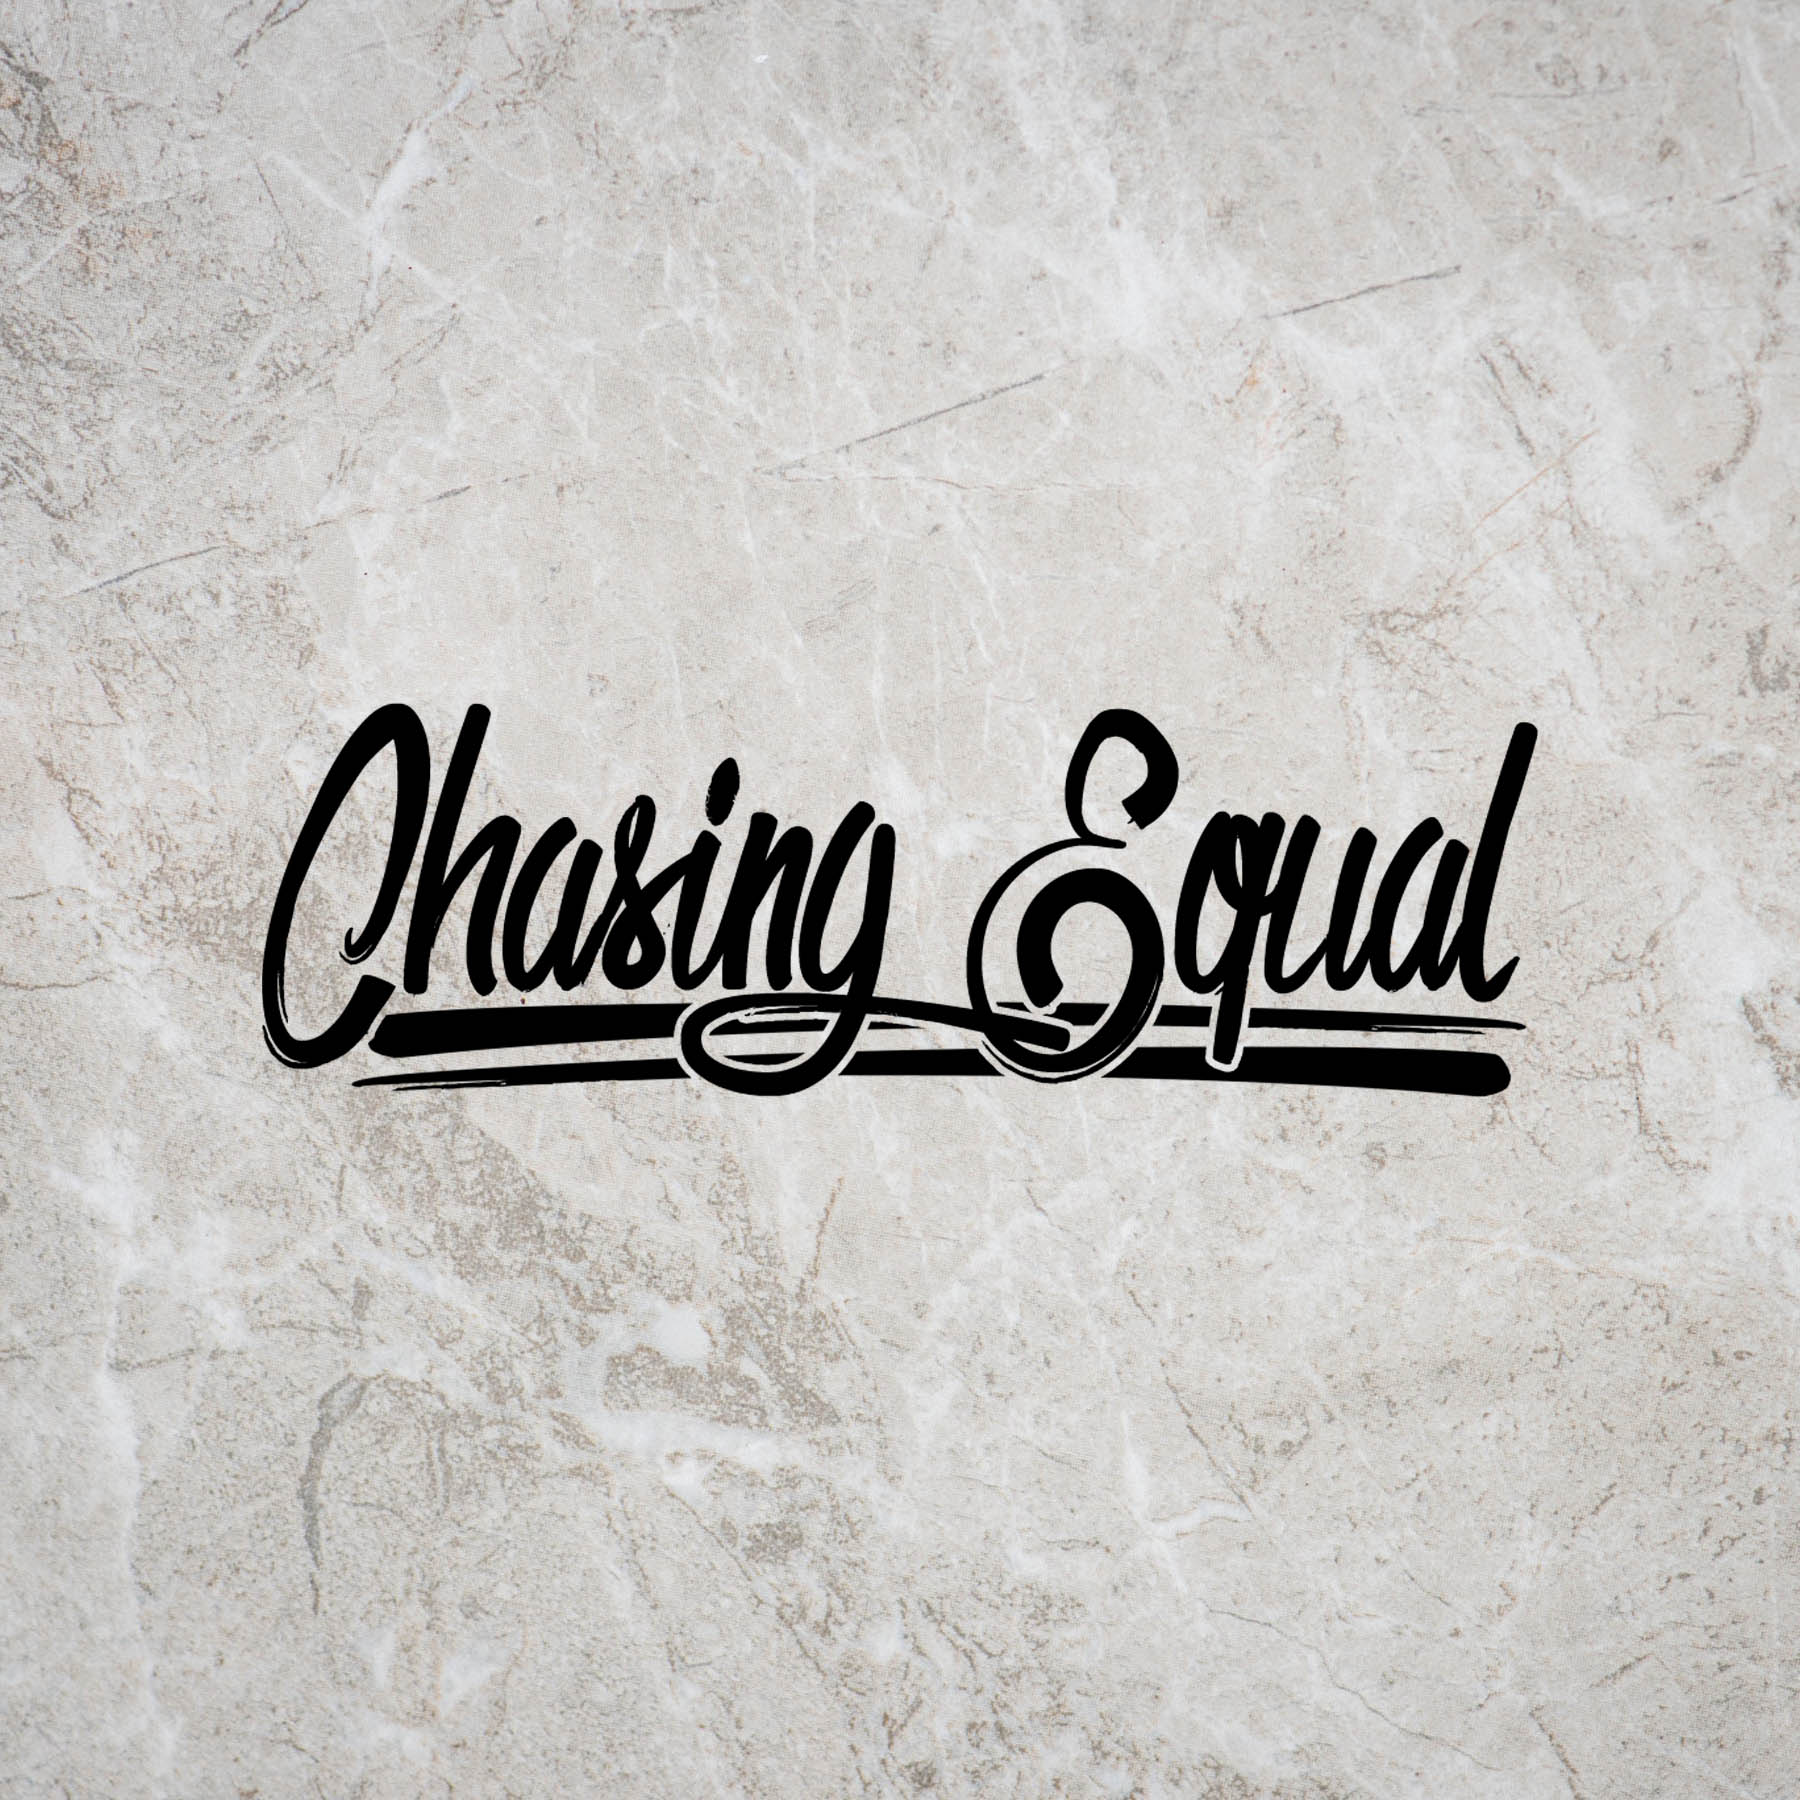 Chasing Logo - Chasing Equal Logo – THE SOUTHERN FOLK